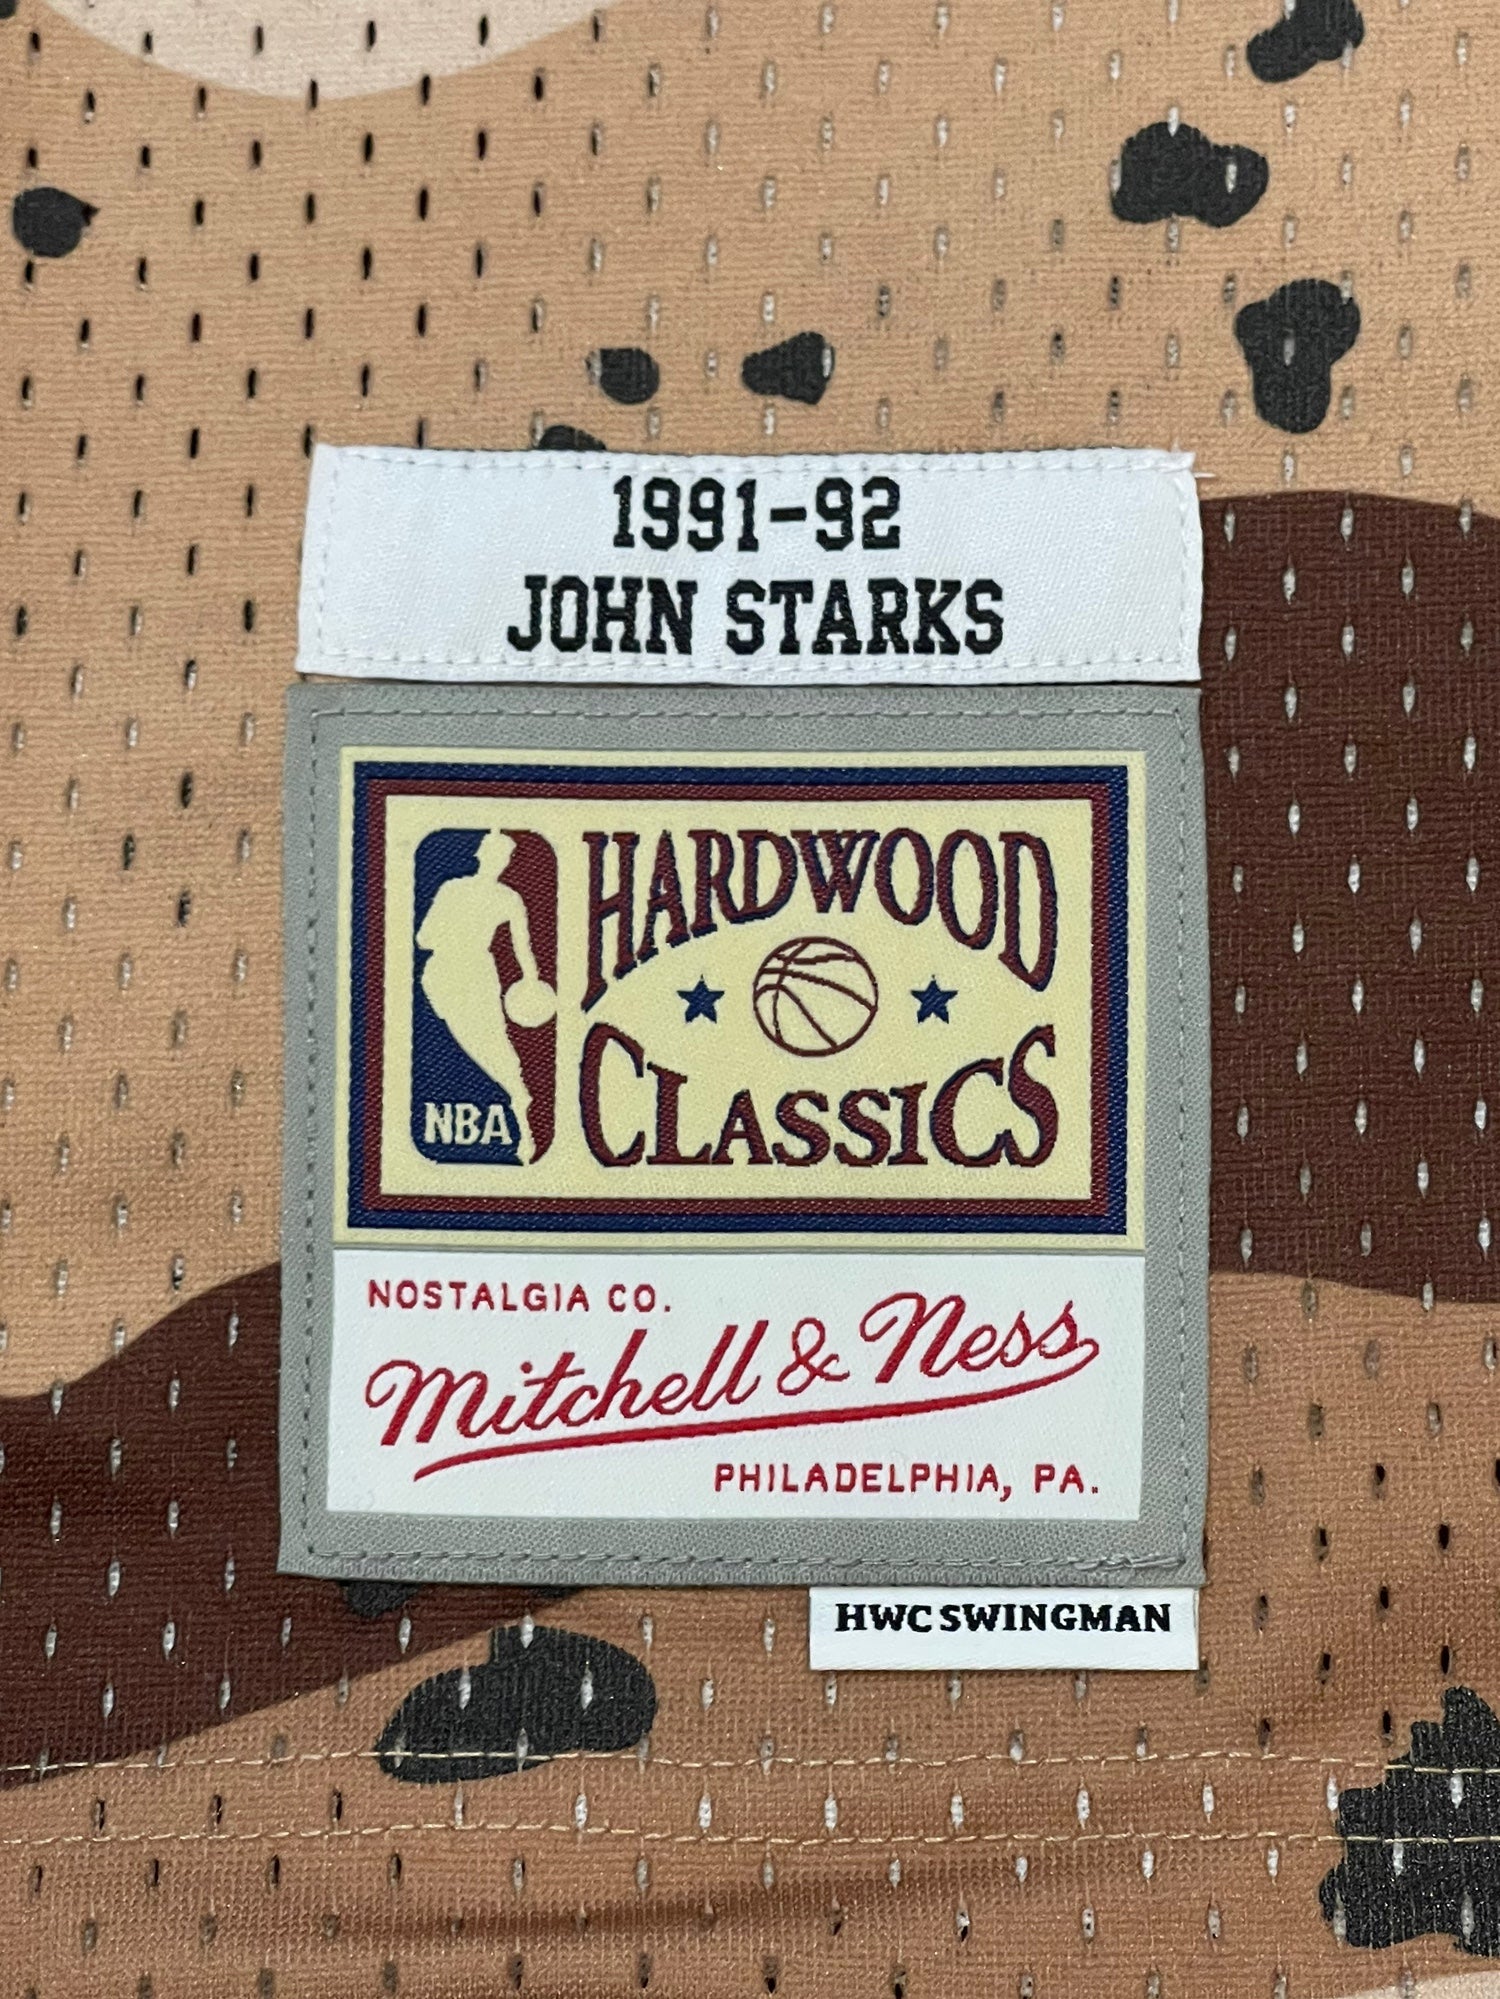 NBA NEW YORK KNICKS 1991-92 SWINGMAN JERSEY JOHN STARKS